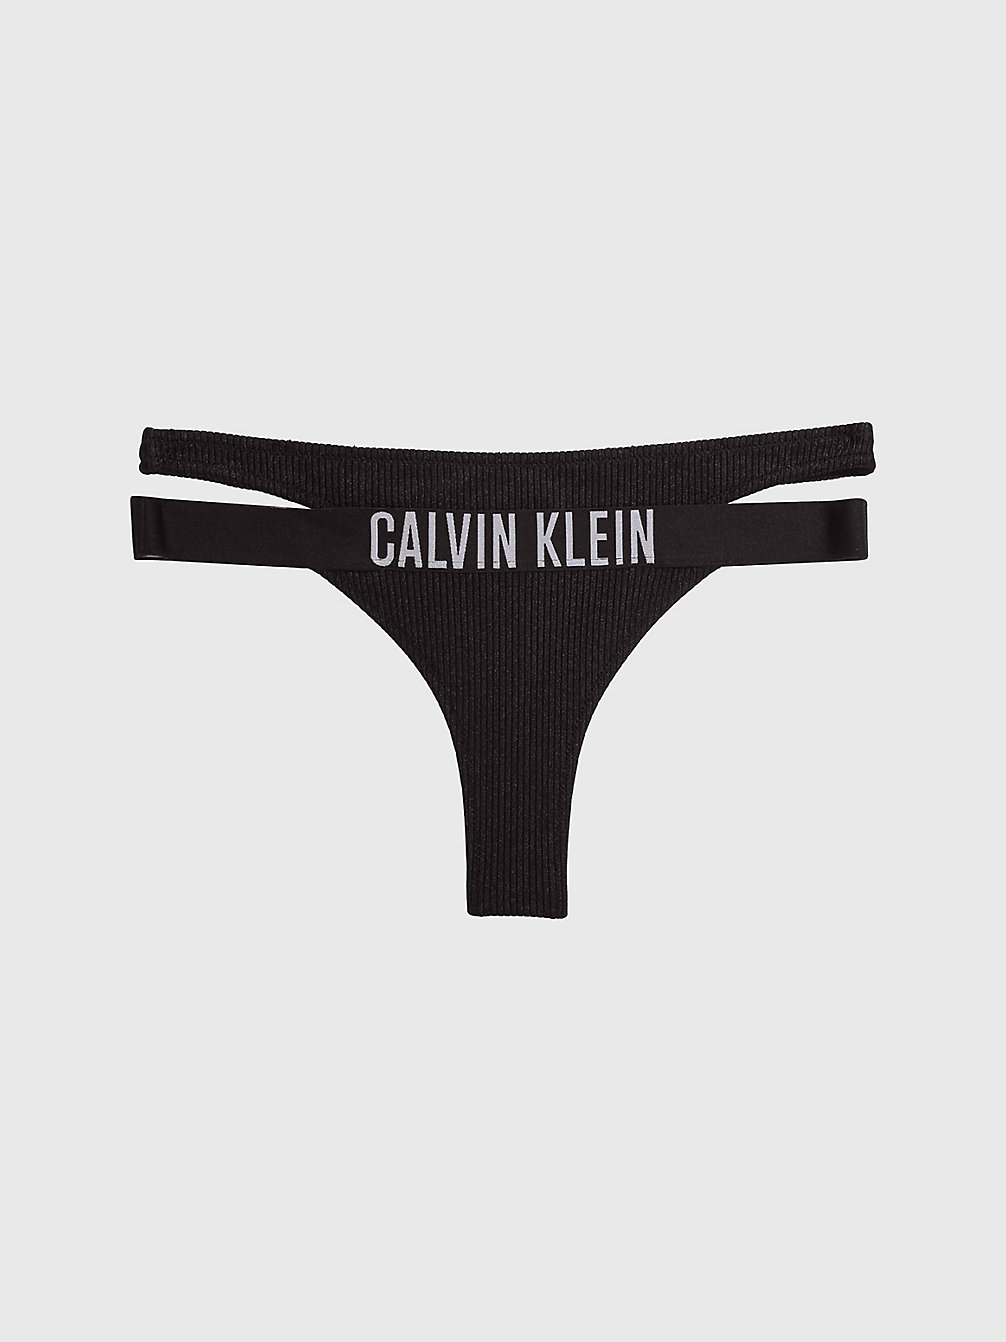 PVH BLACK Thong Bikini Bottoms - Intense Power undefined women Calvin Klein